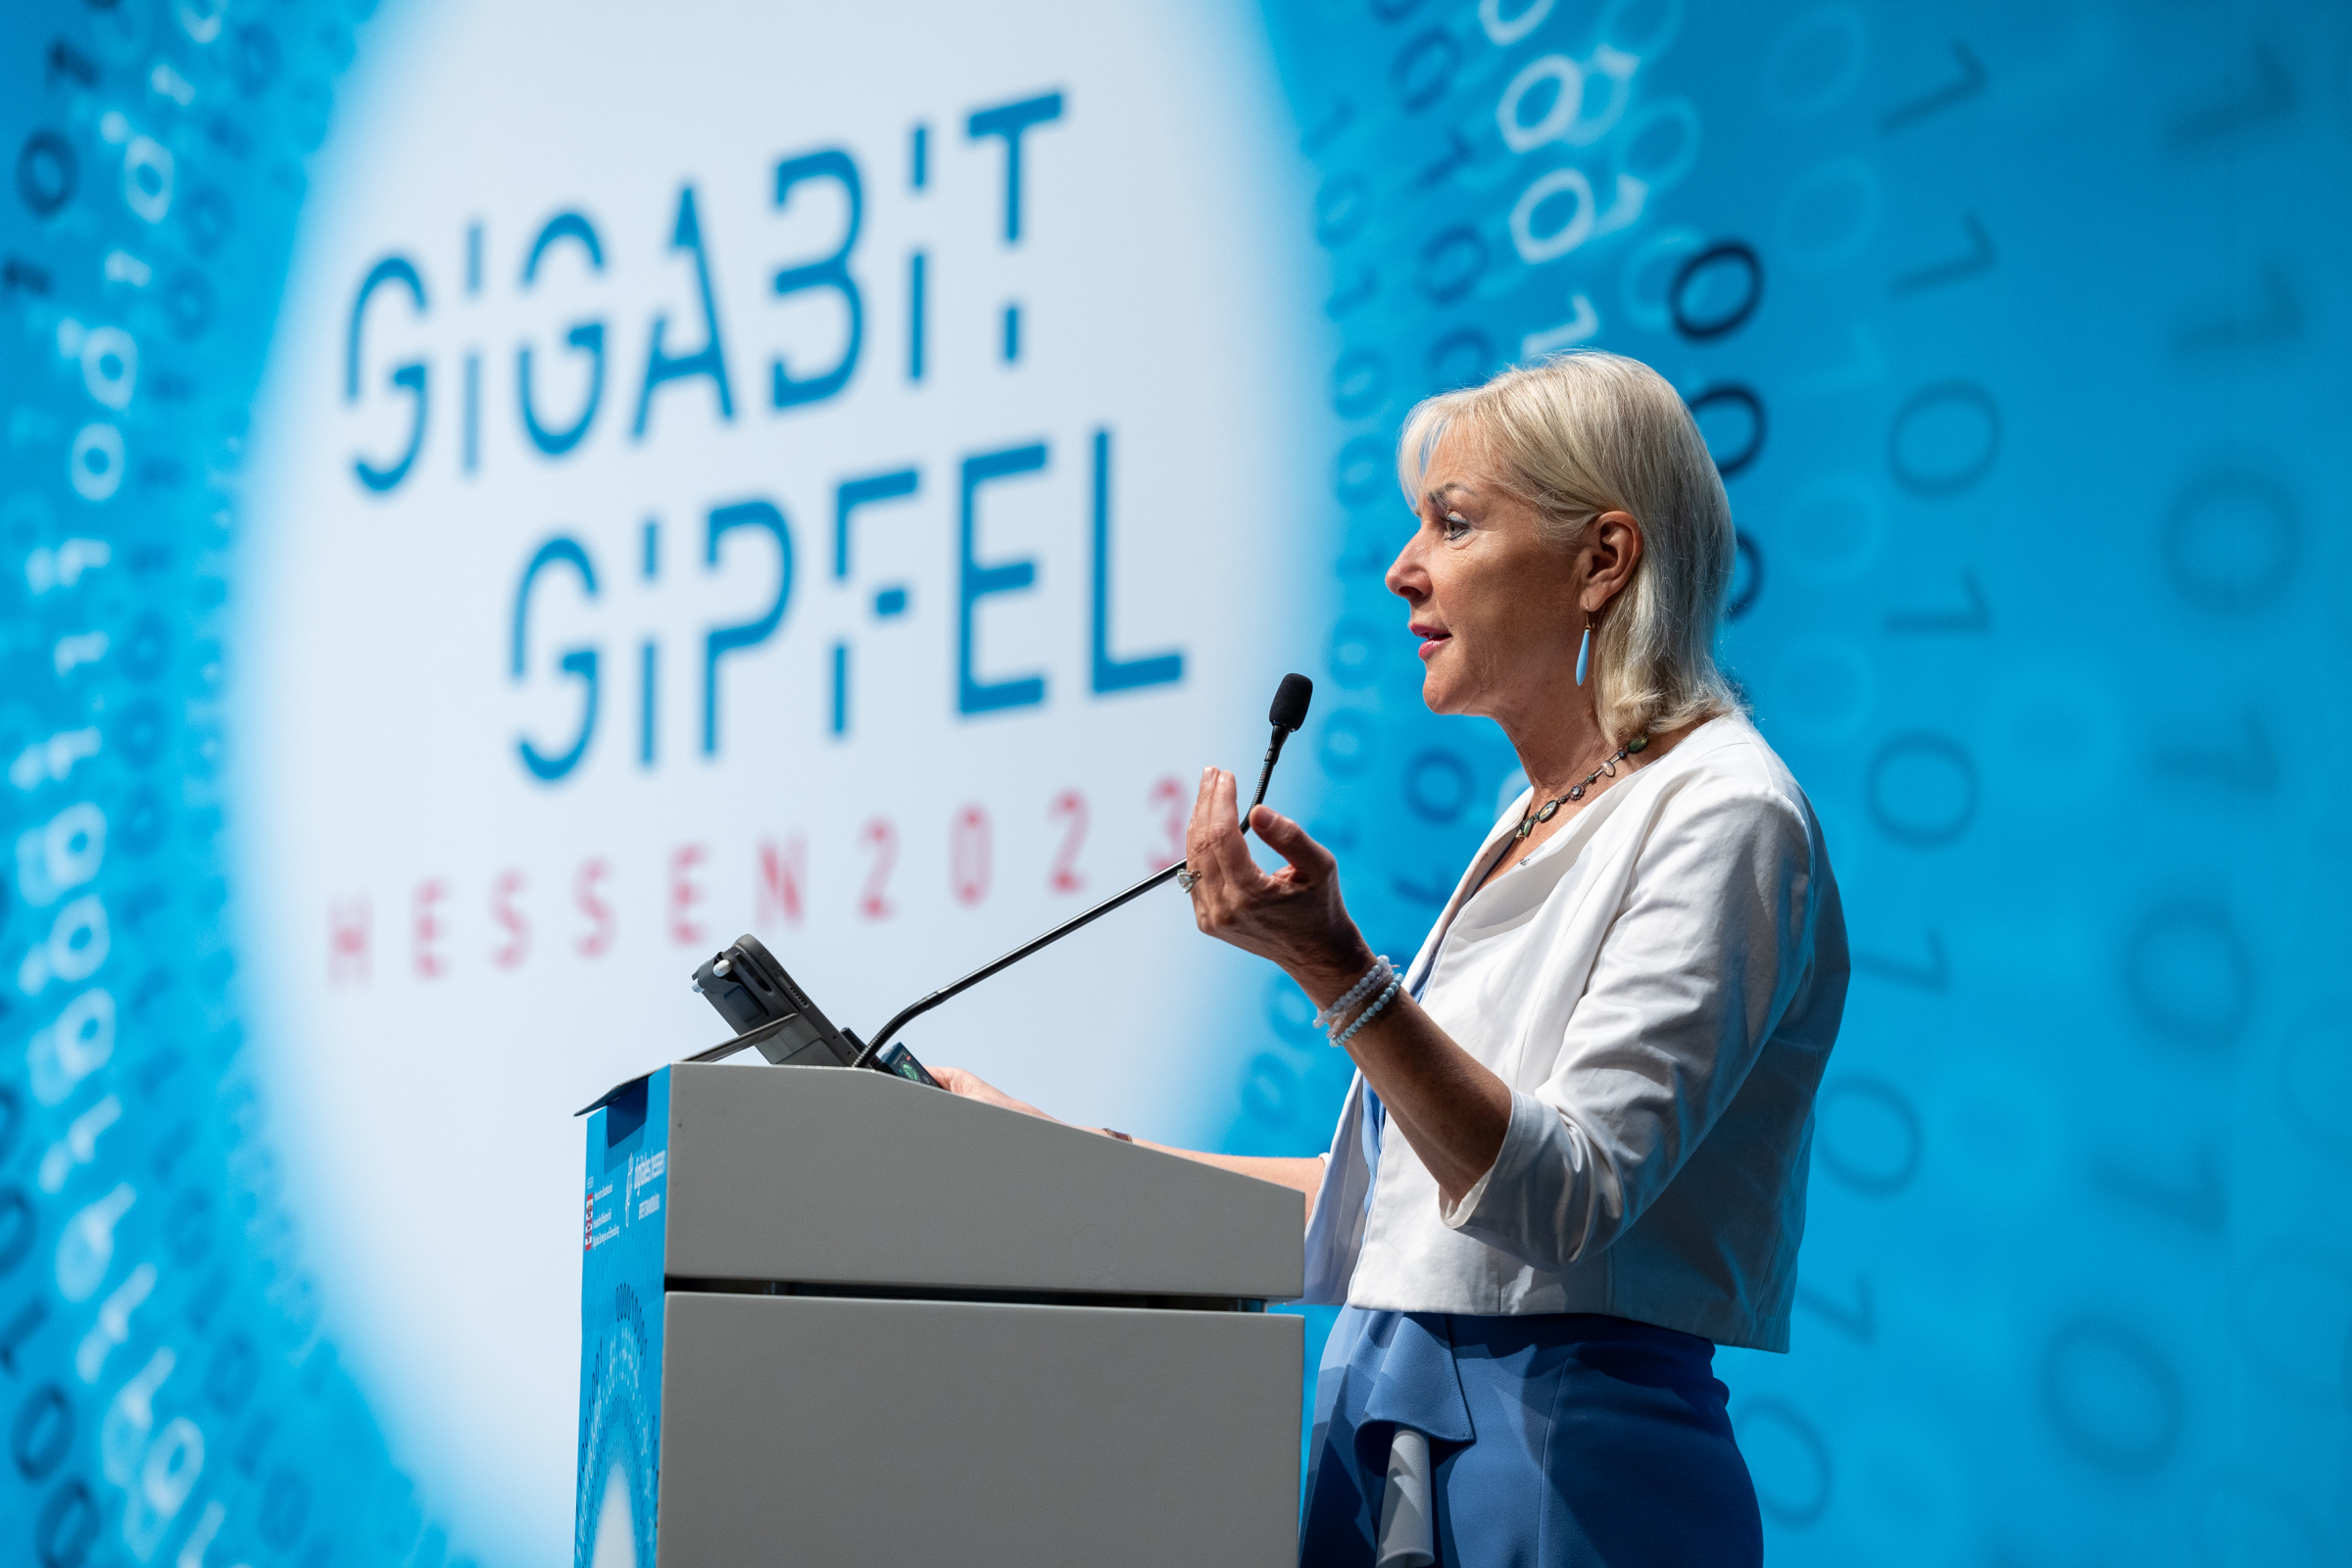 Gigabitgipfel Hessen 2023